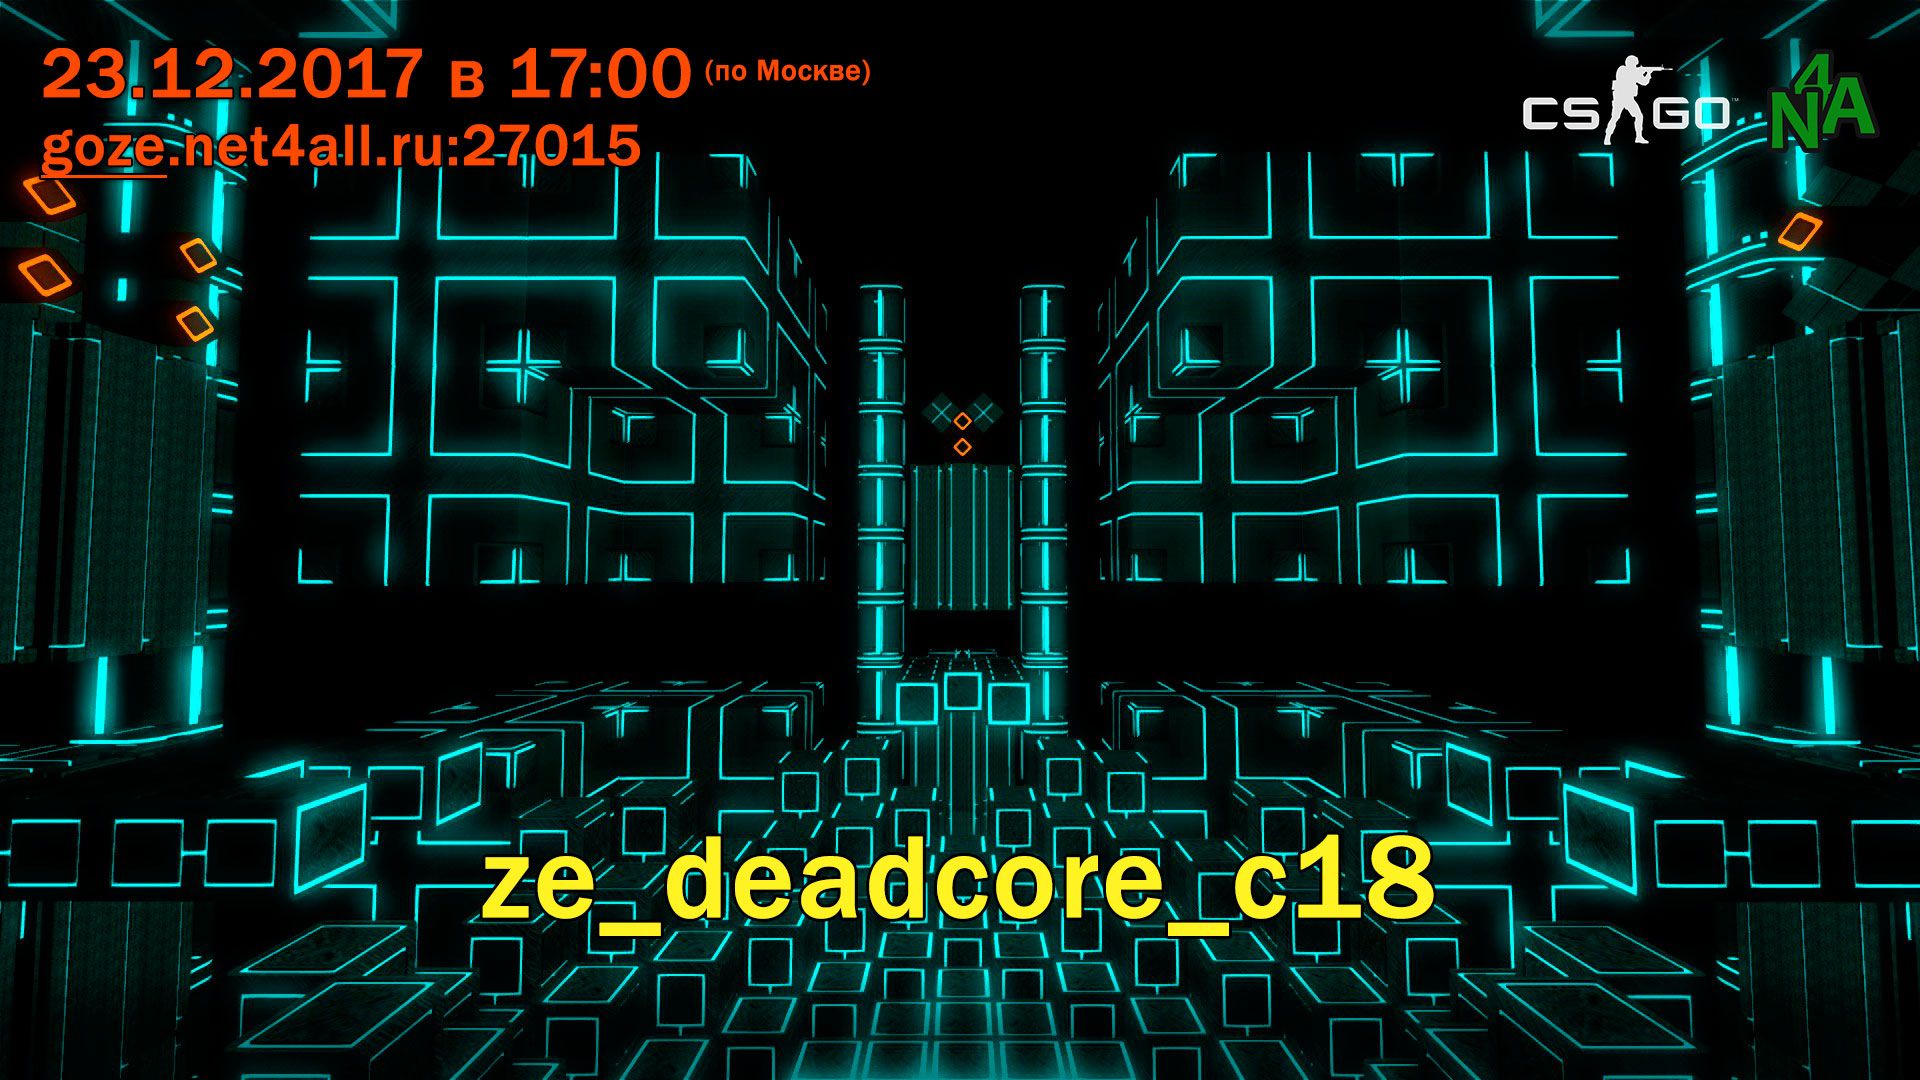 event_csgo_-ze_deadcore_c18-.jpg